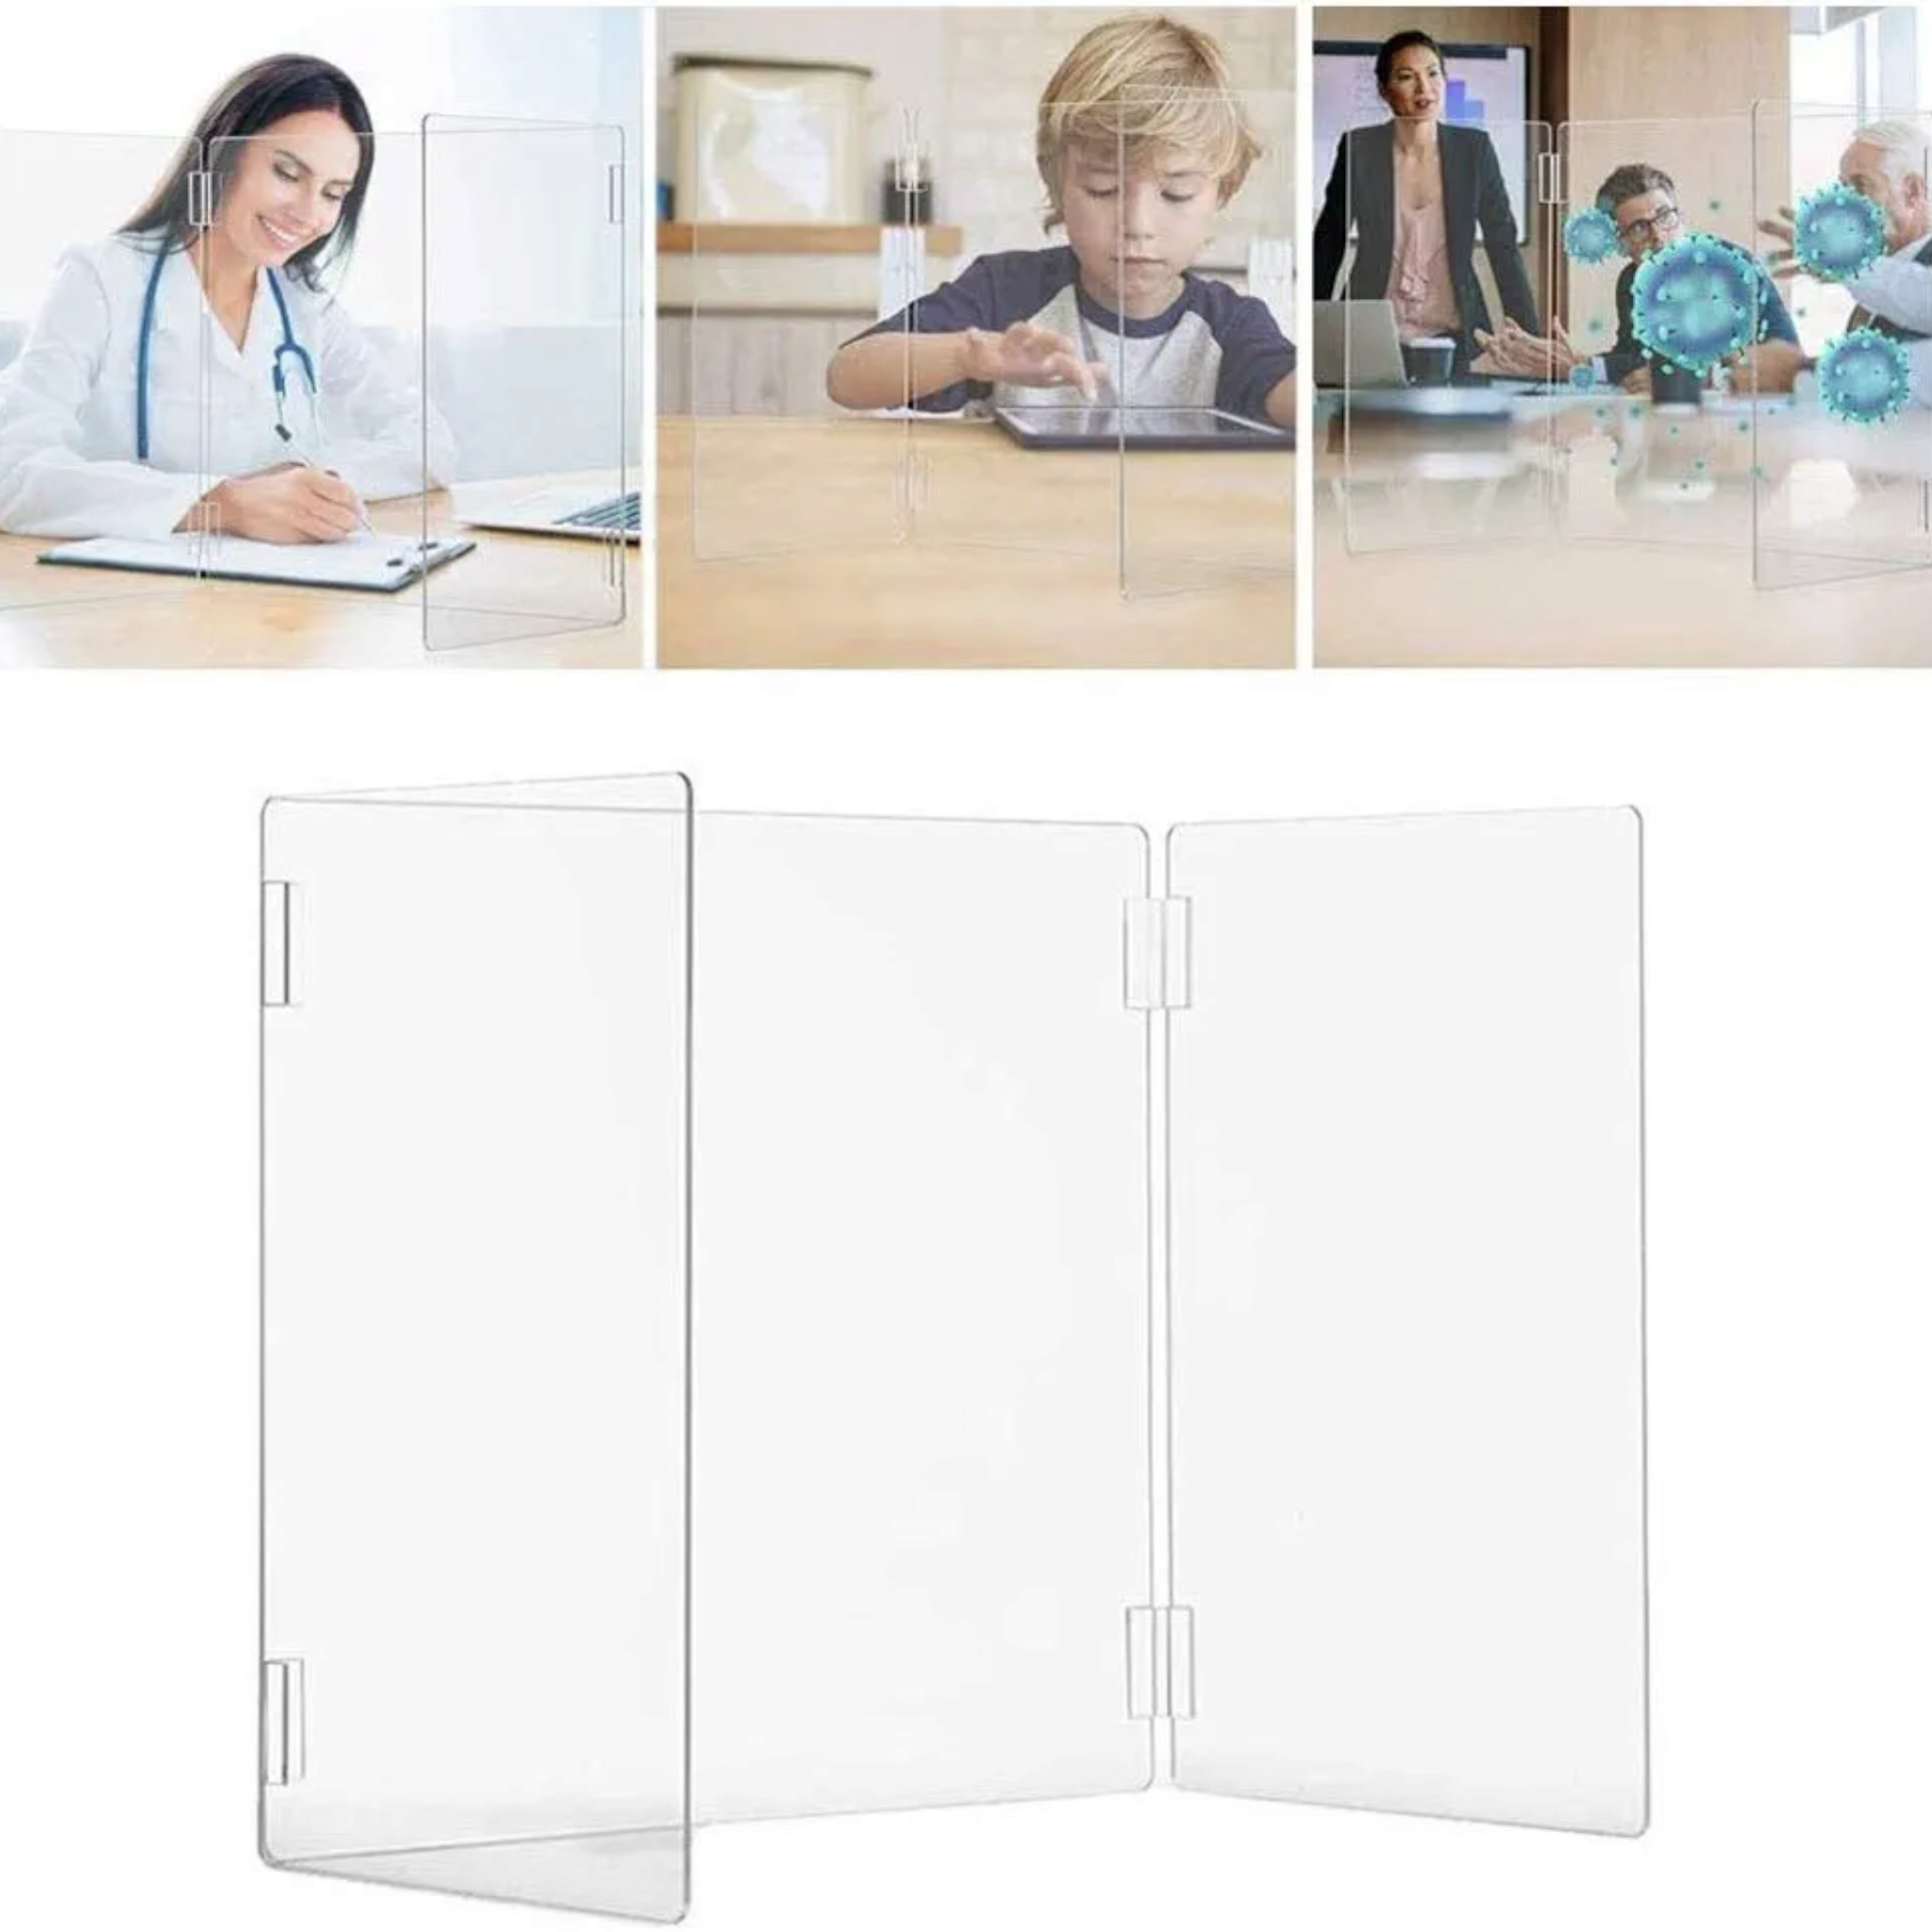 Plexiglass Acrylic Protective Counter Screen Guard